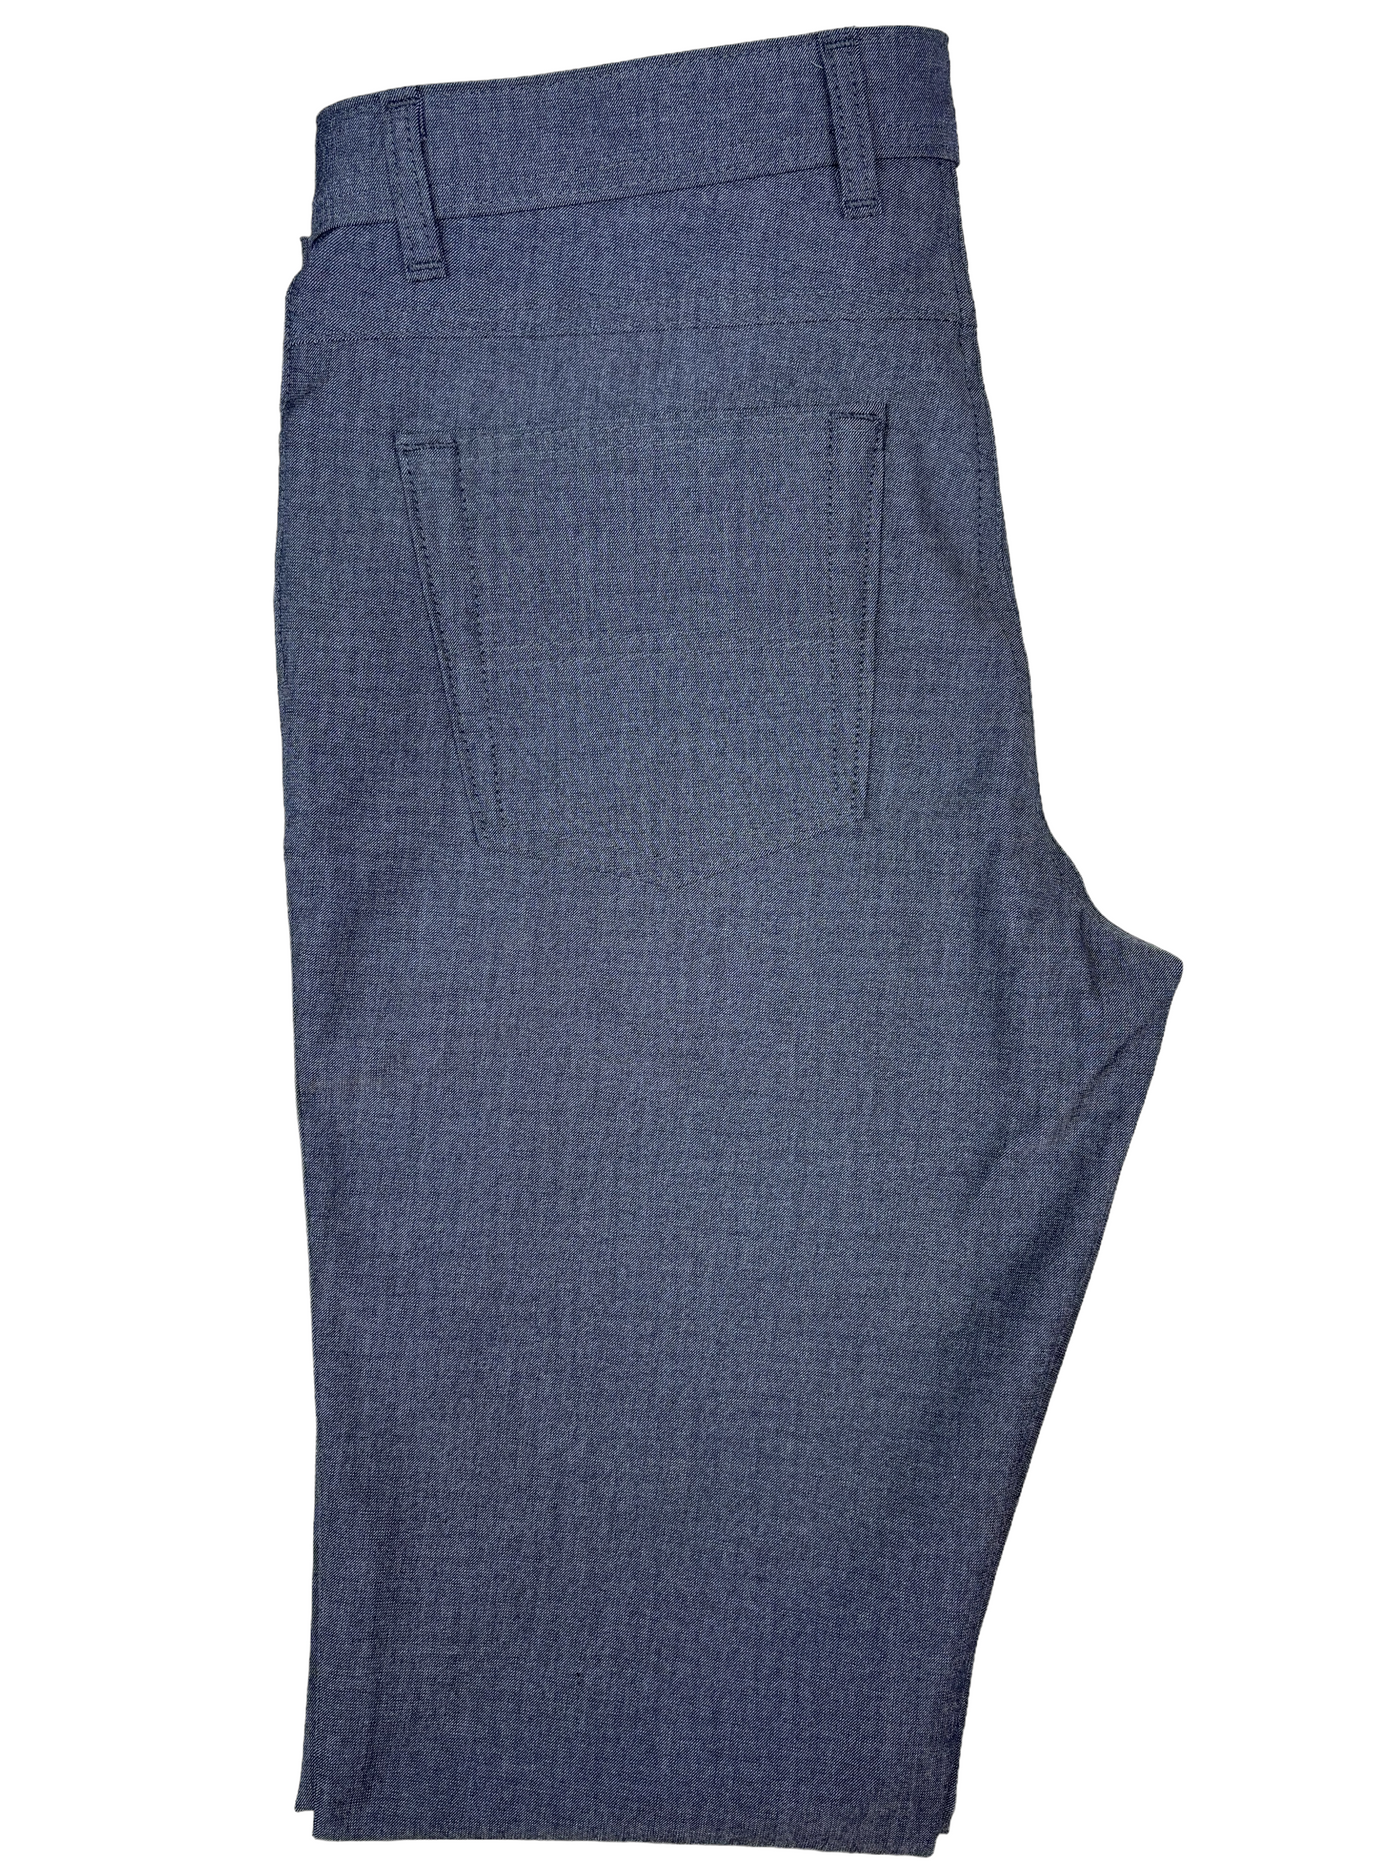 Pantalon bleu extensible Maxi